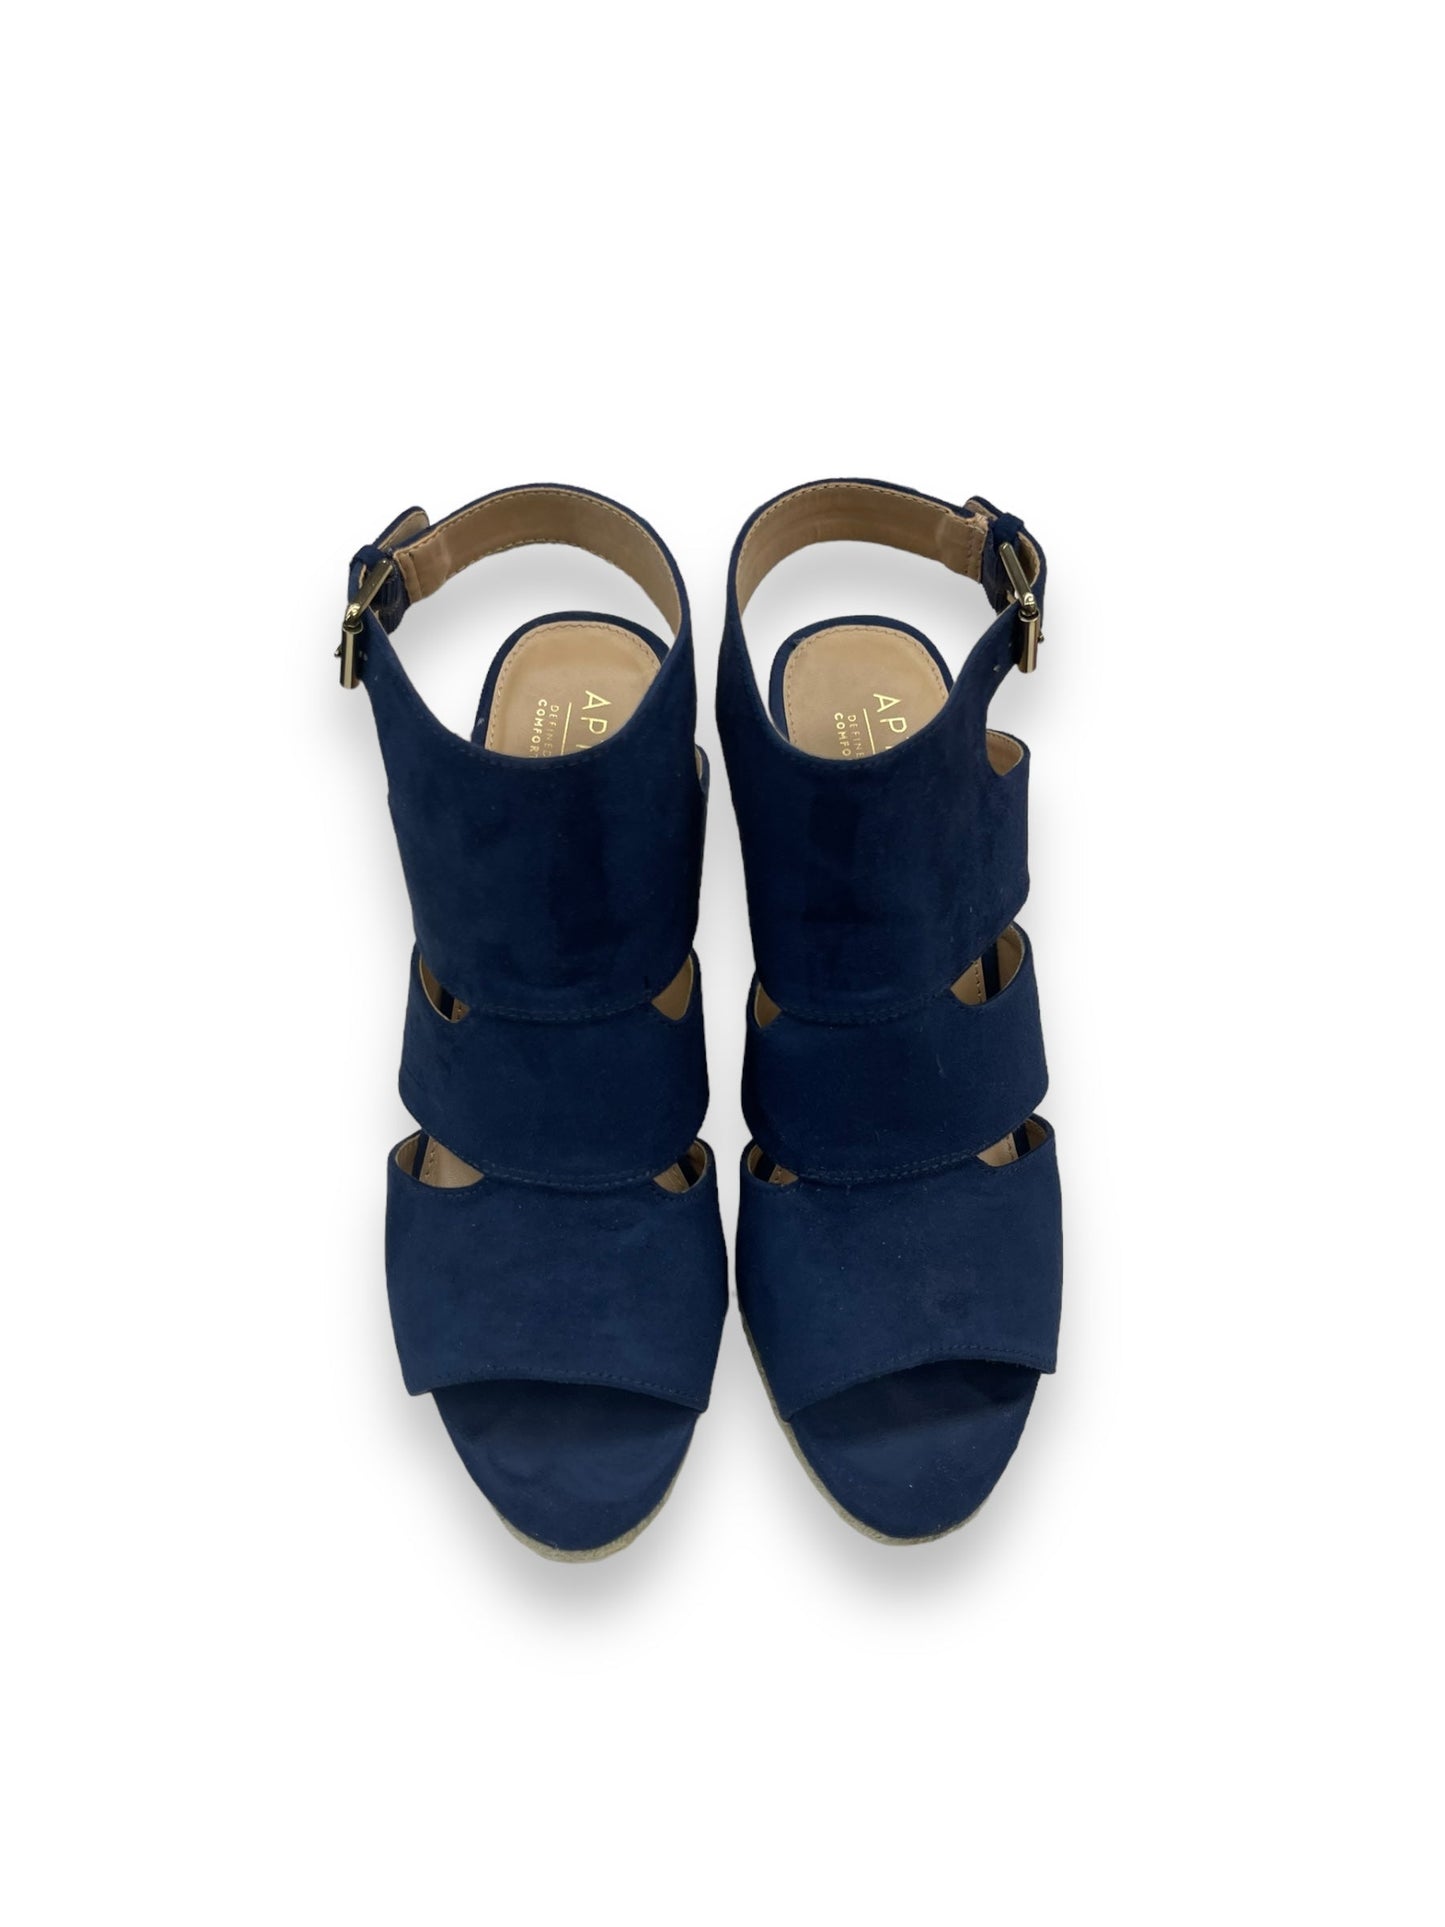 Sandals Heels Wedge By Apt 9  Size: 9.5